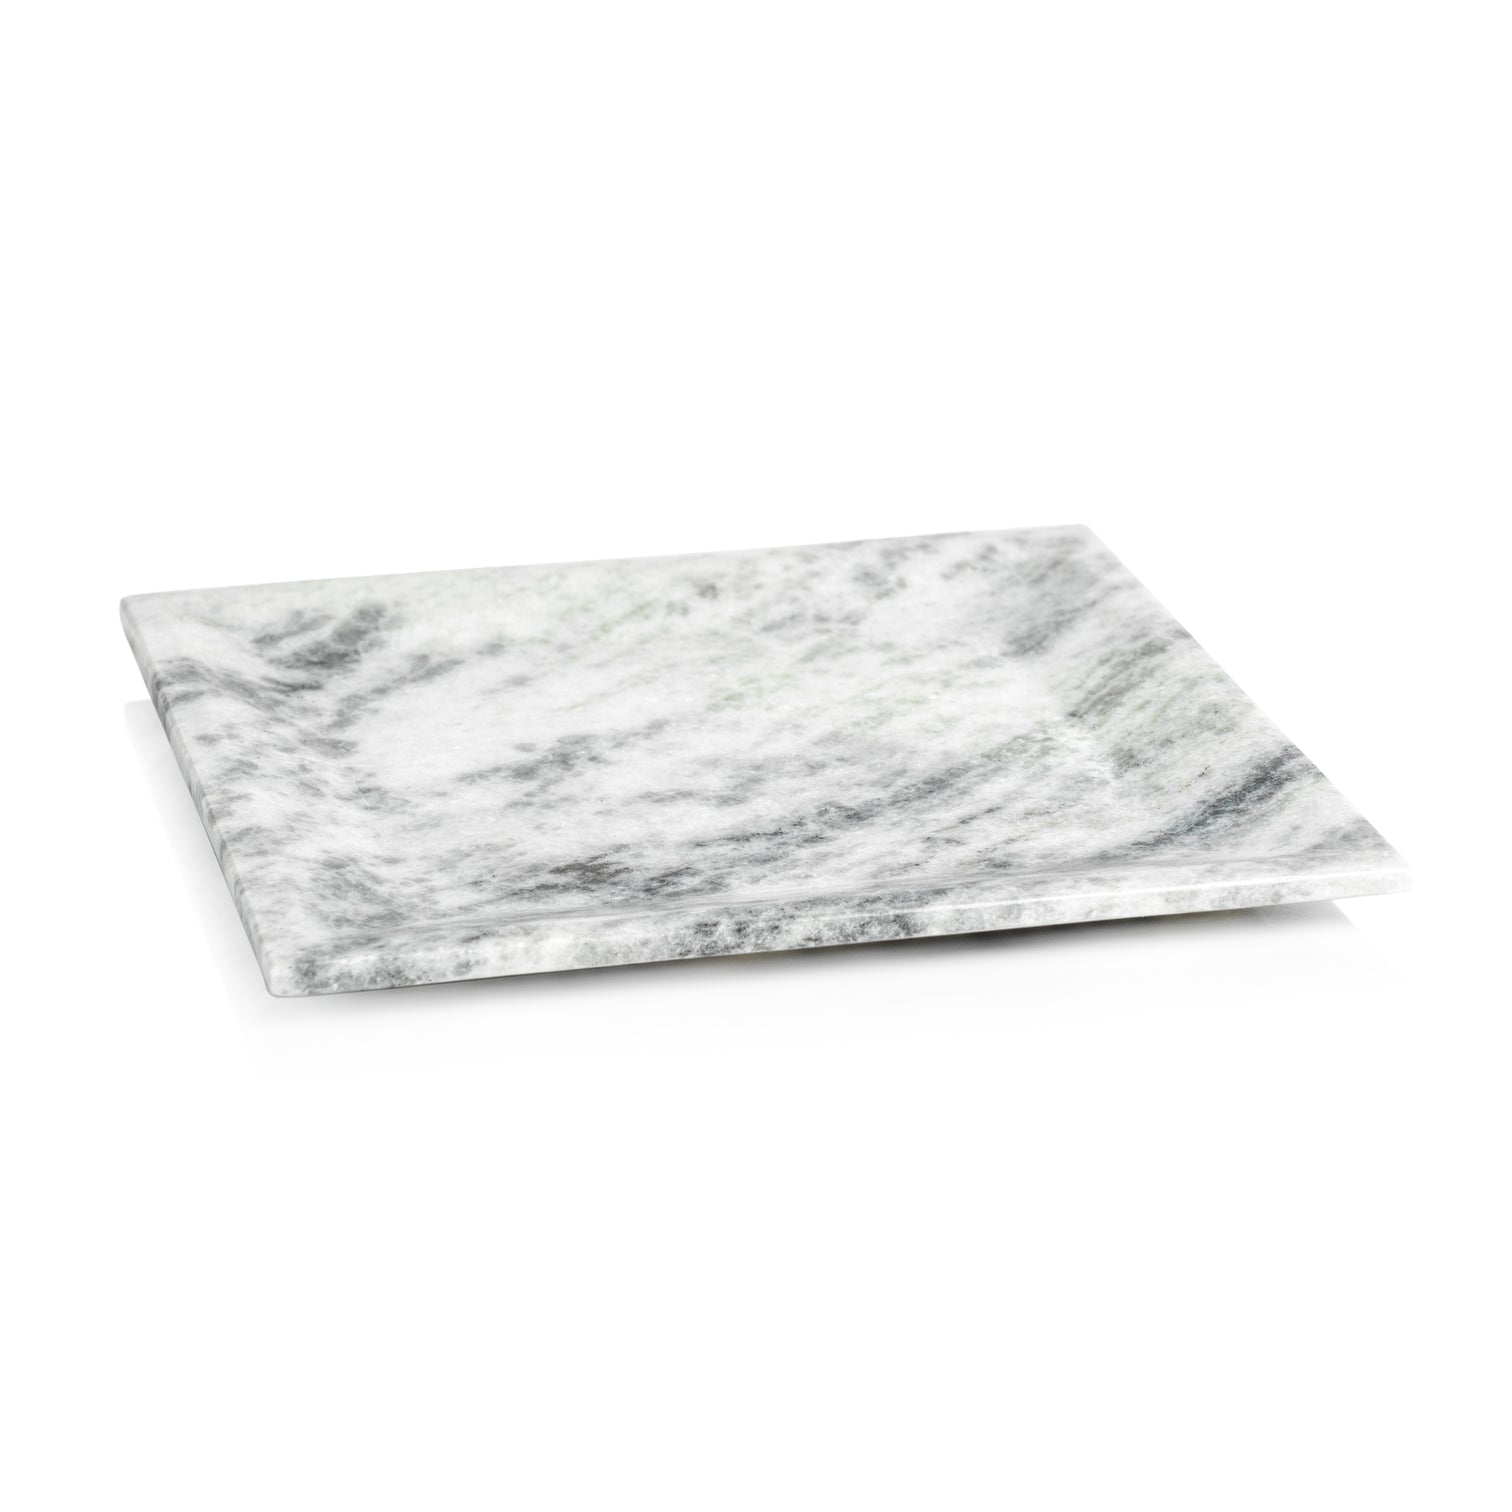 Palomar Marble Tray - White Gray